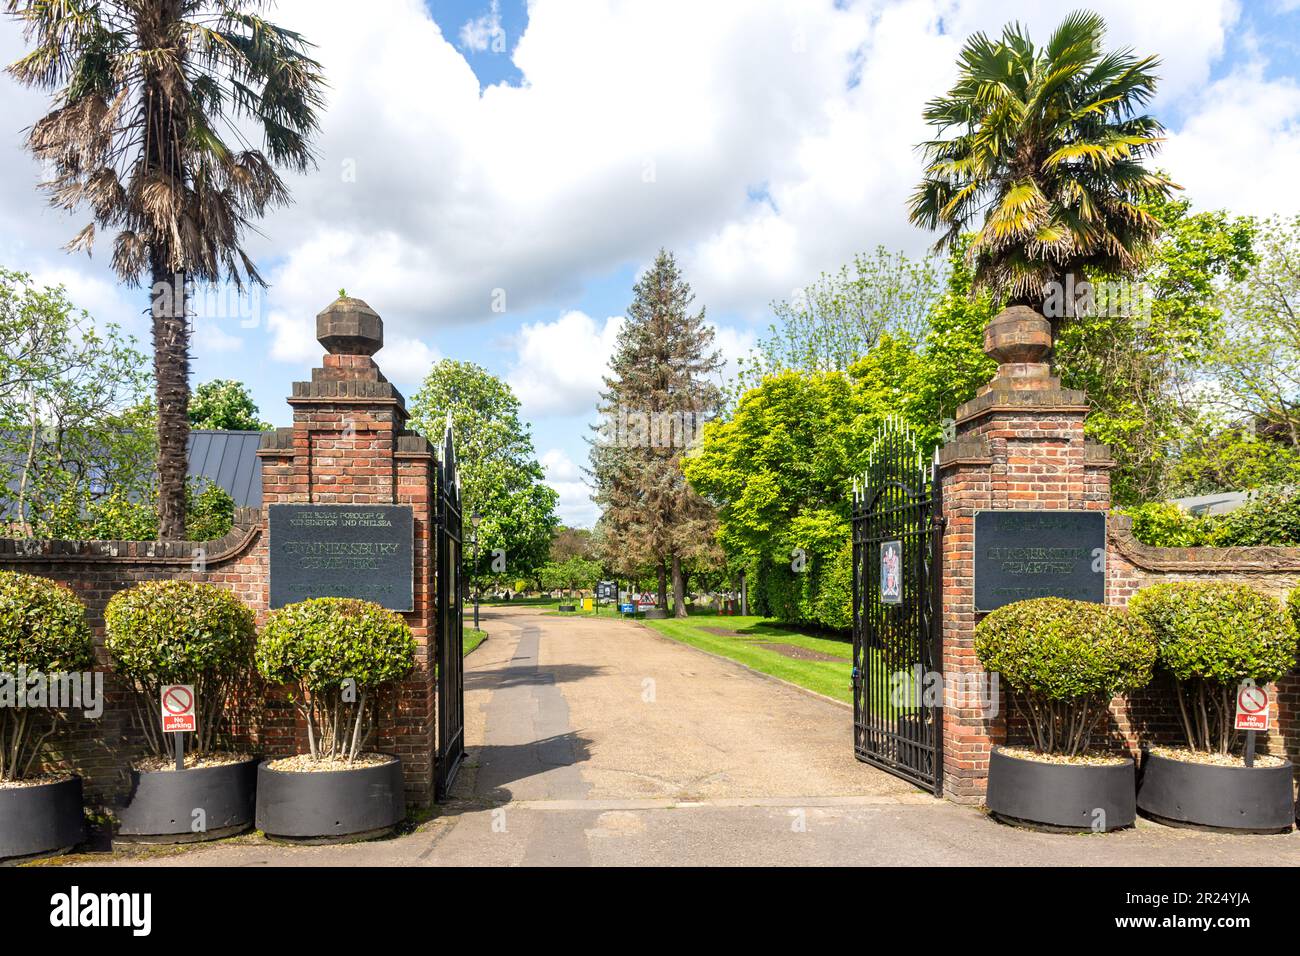 Entrance gate to Gunnersbury Cemetery, Gunnersbury, The Royal Borough of Kensington & Chelsea, Greater London, England, United Kingdom Stock Photo